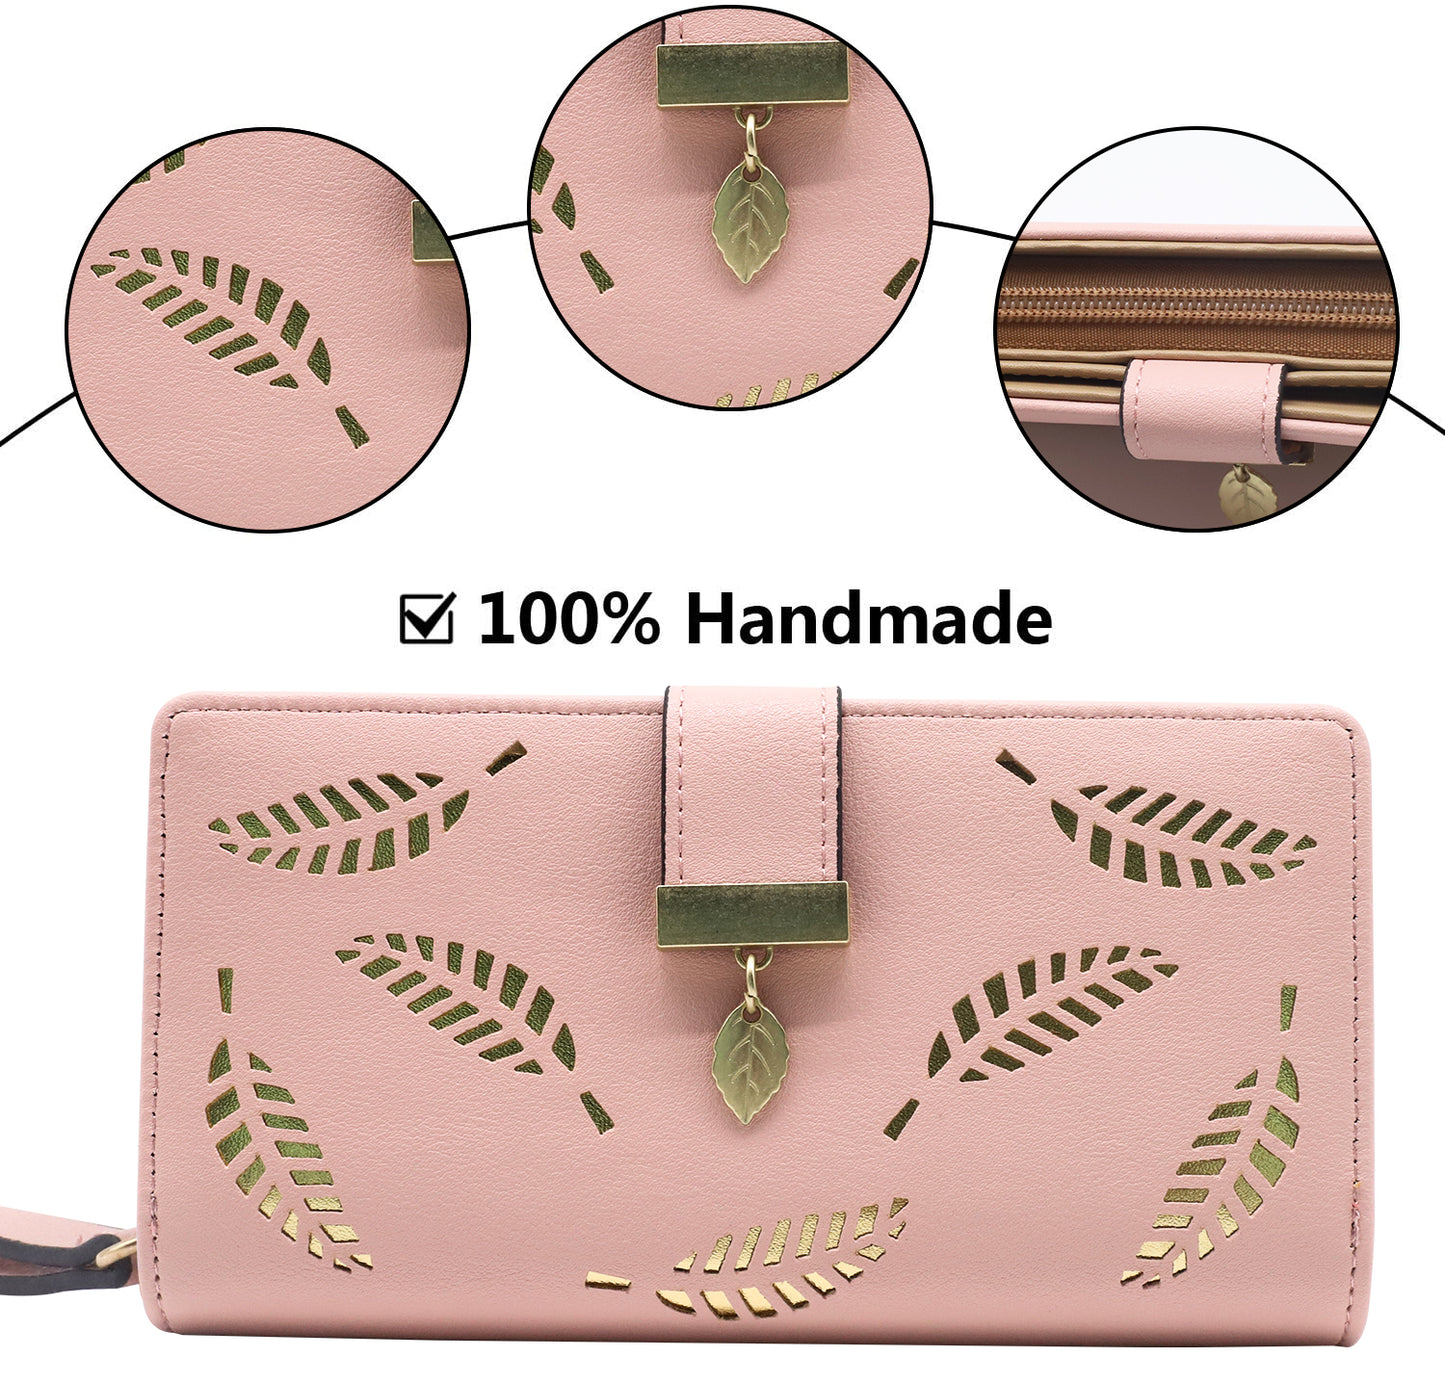 SANNIDHI  Women's Leather Wallet Hollow Leaf Pattern Bifold Long Wallet (Pink)